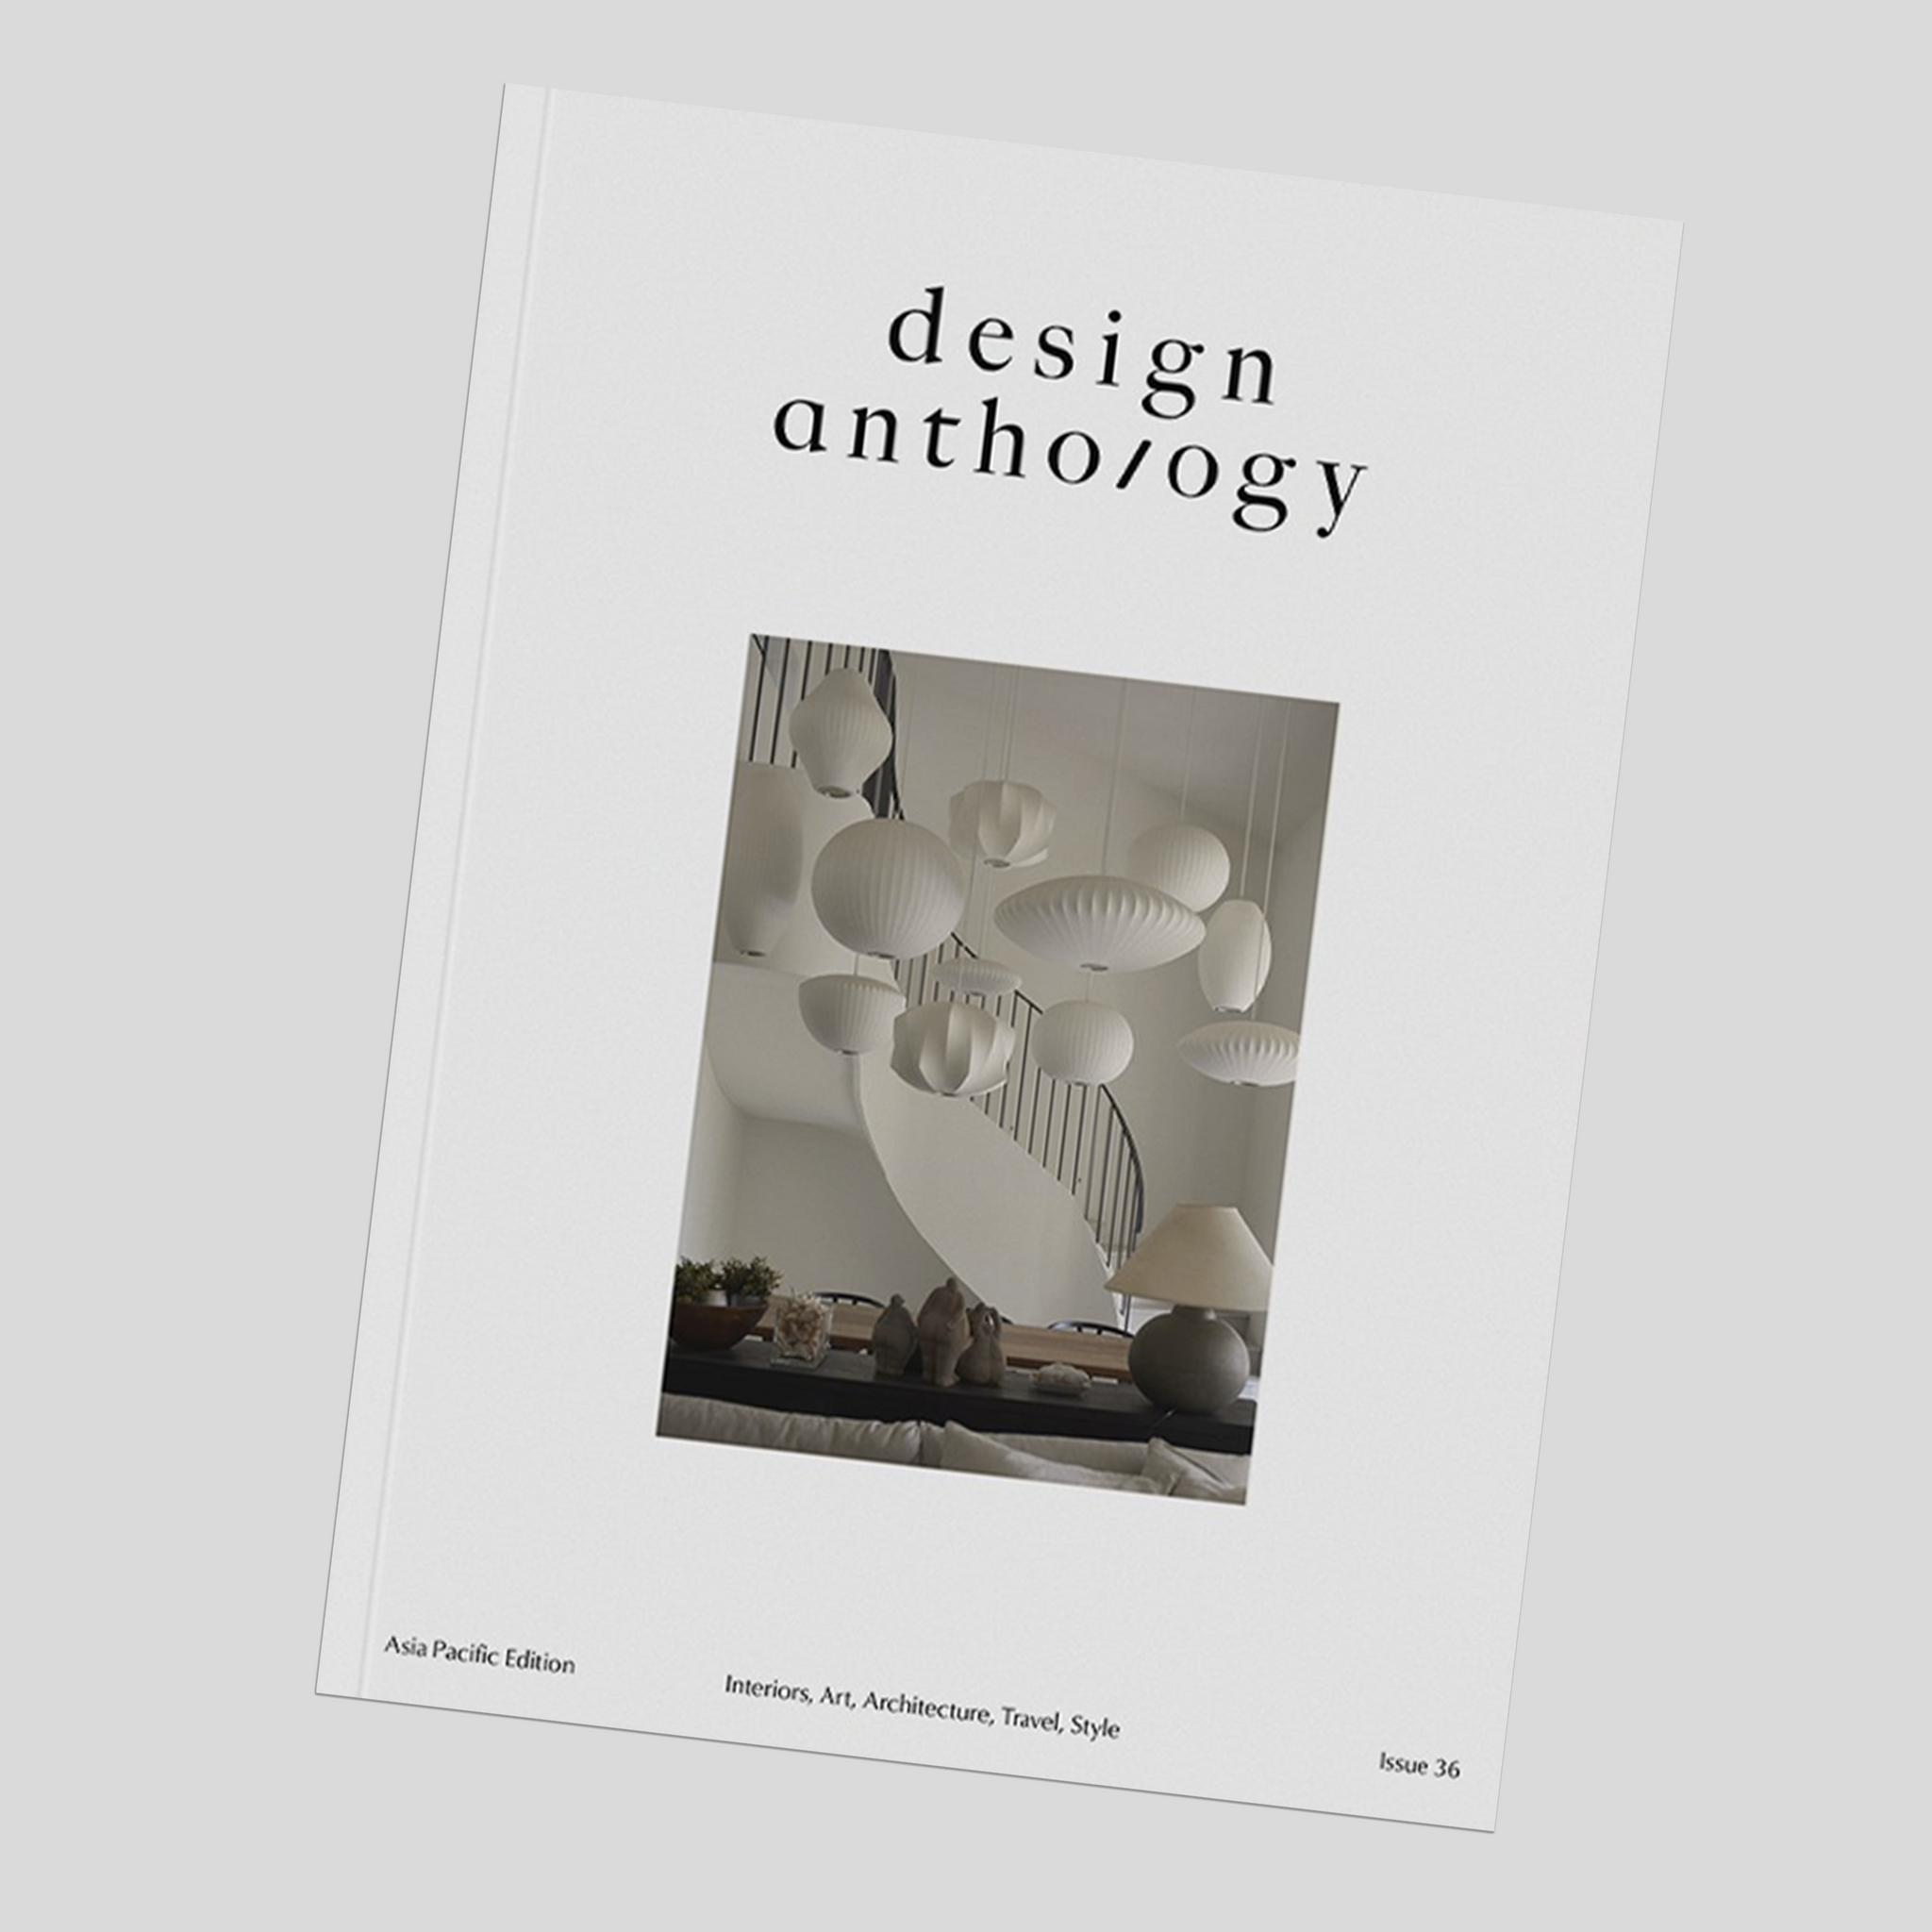 Design anthology #36